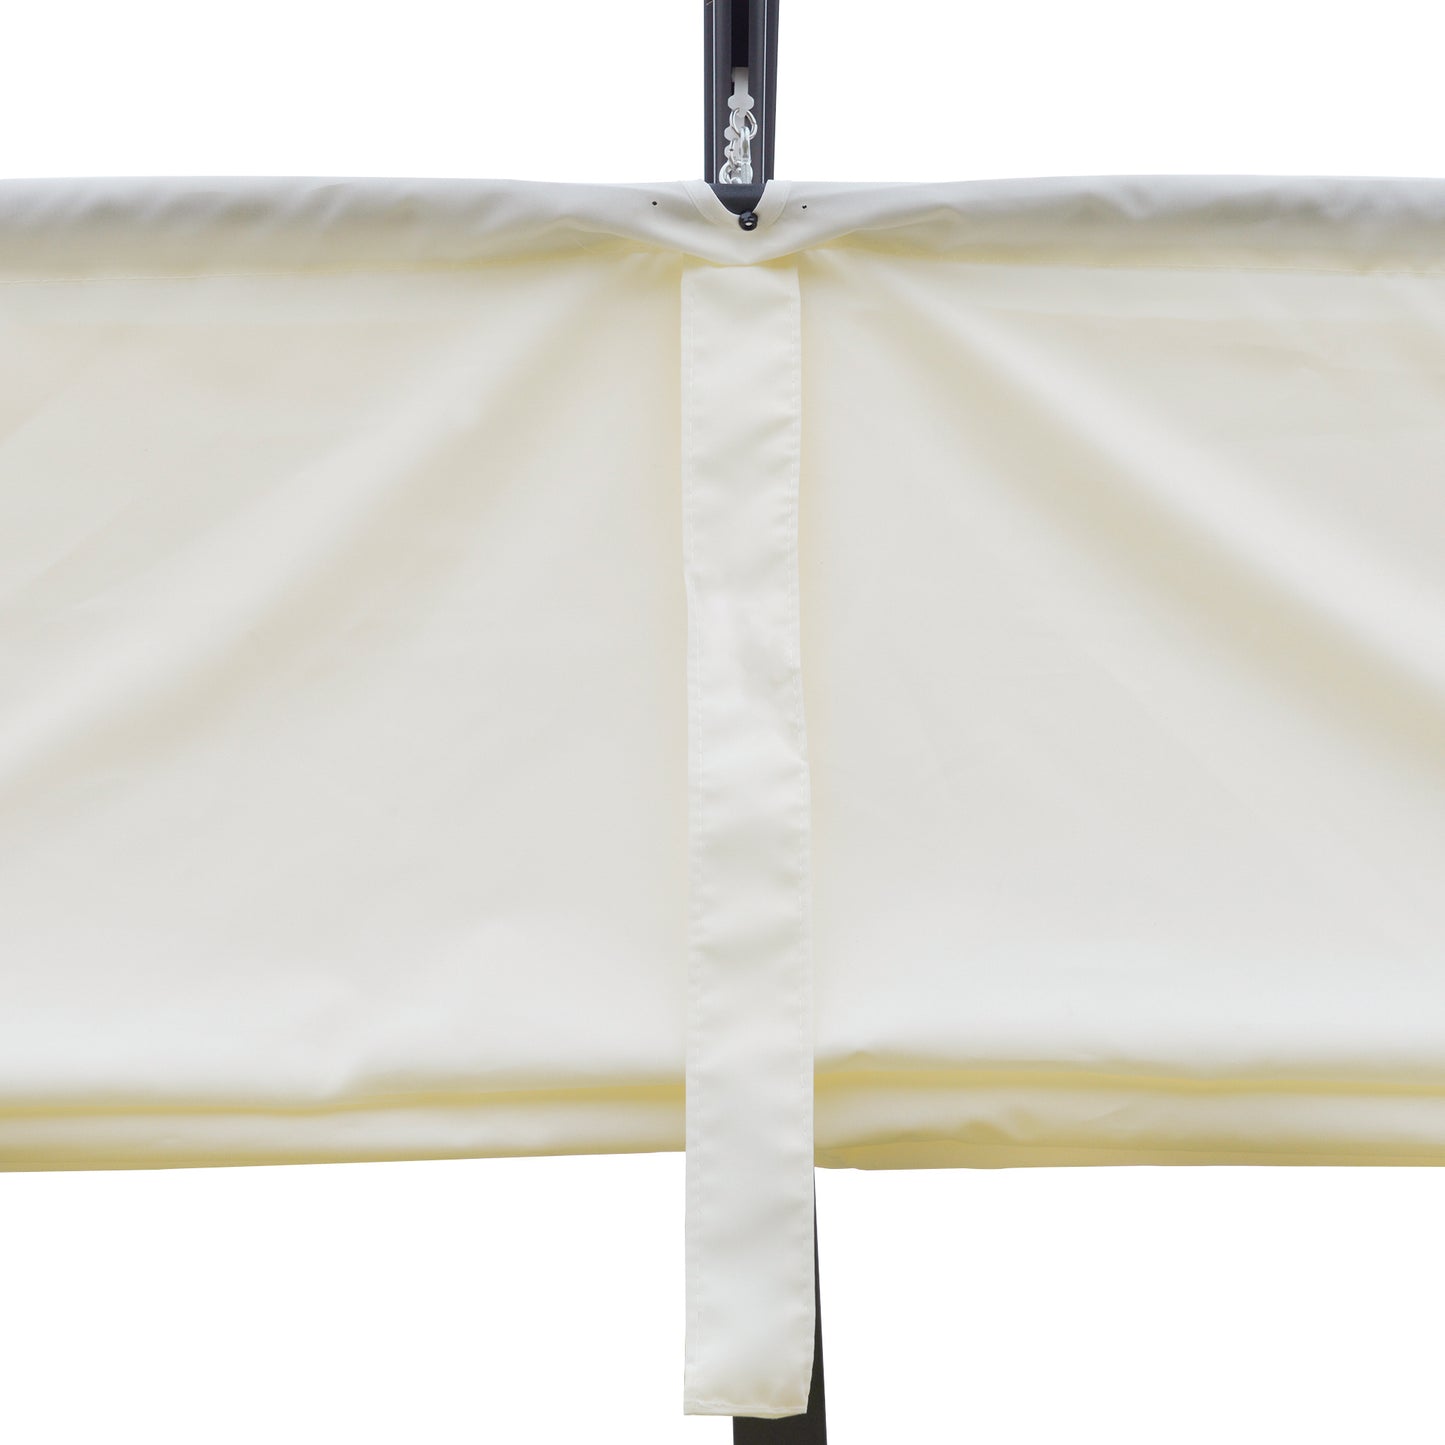 Outsunny 3 x 3(m) Outdoor Pergola Retractable Canopy Wall Mounted Gazebo Patio Shelter Sun Shade, Cream White